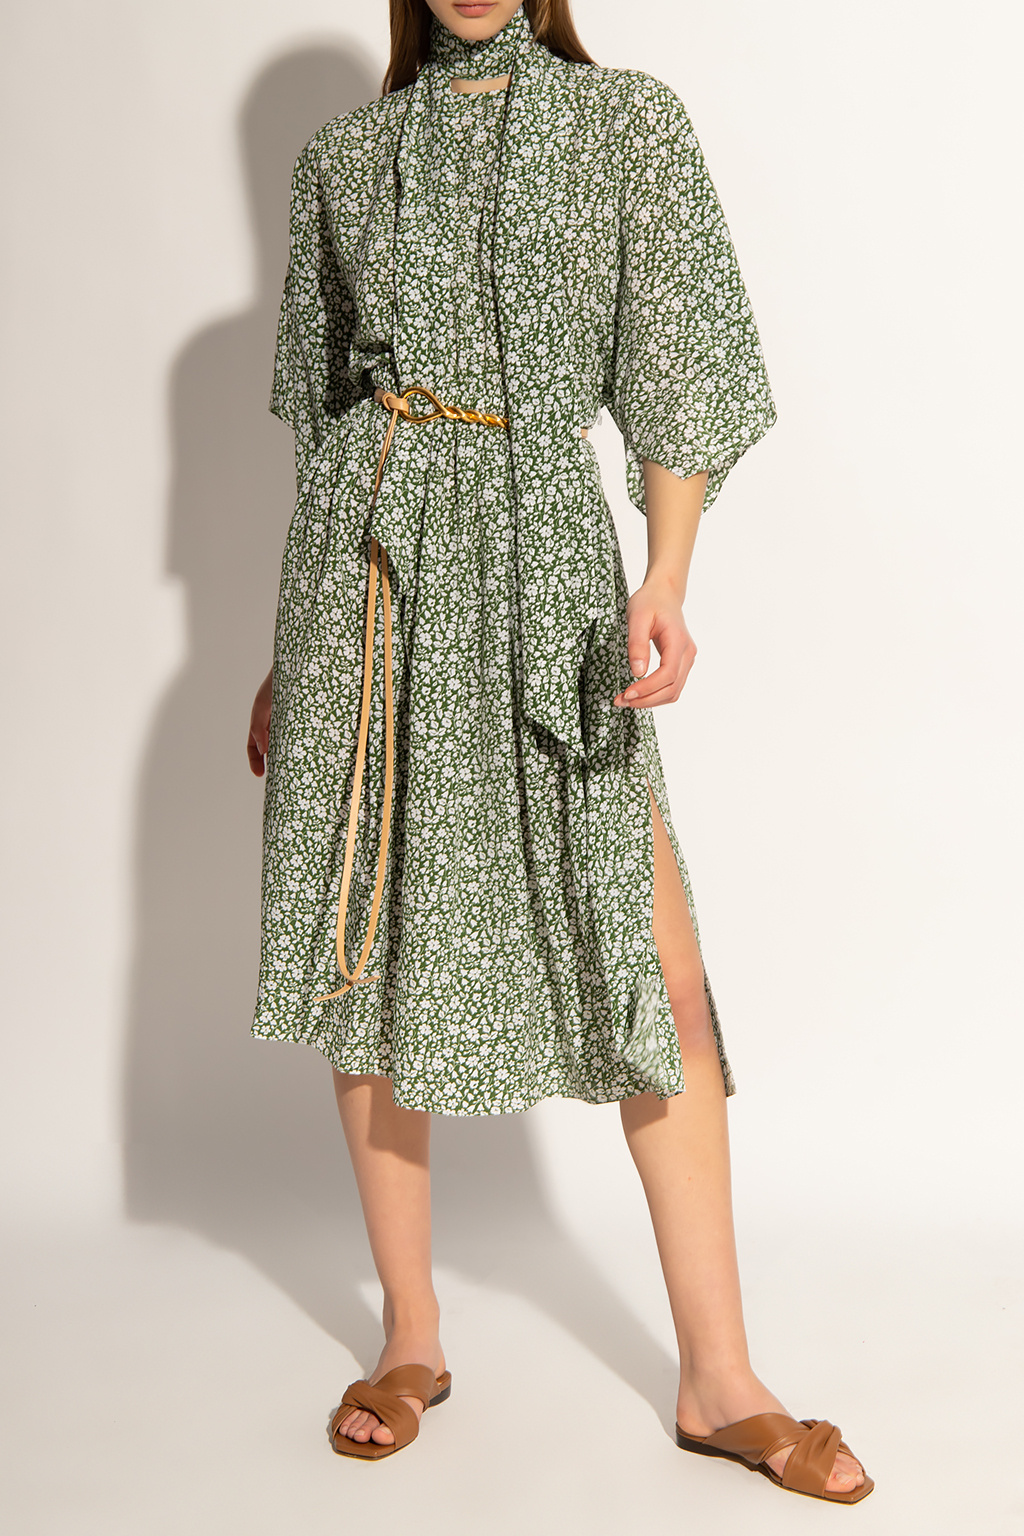 Michael Kors Patterned dress with slits | Women's Clothing | IetpShops